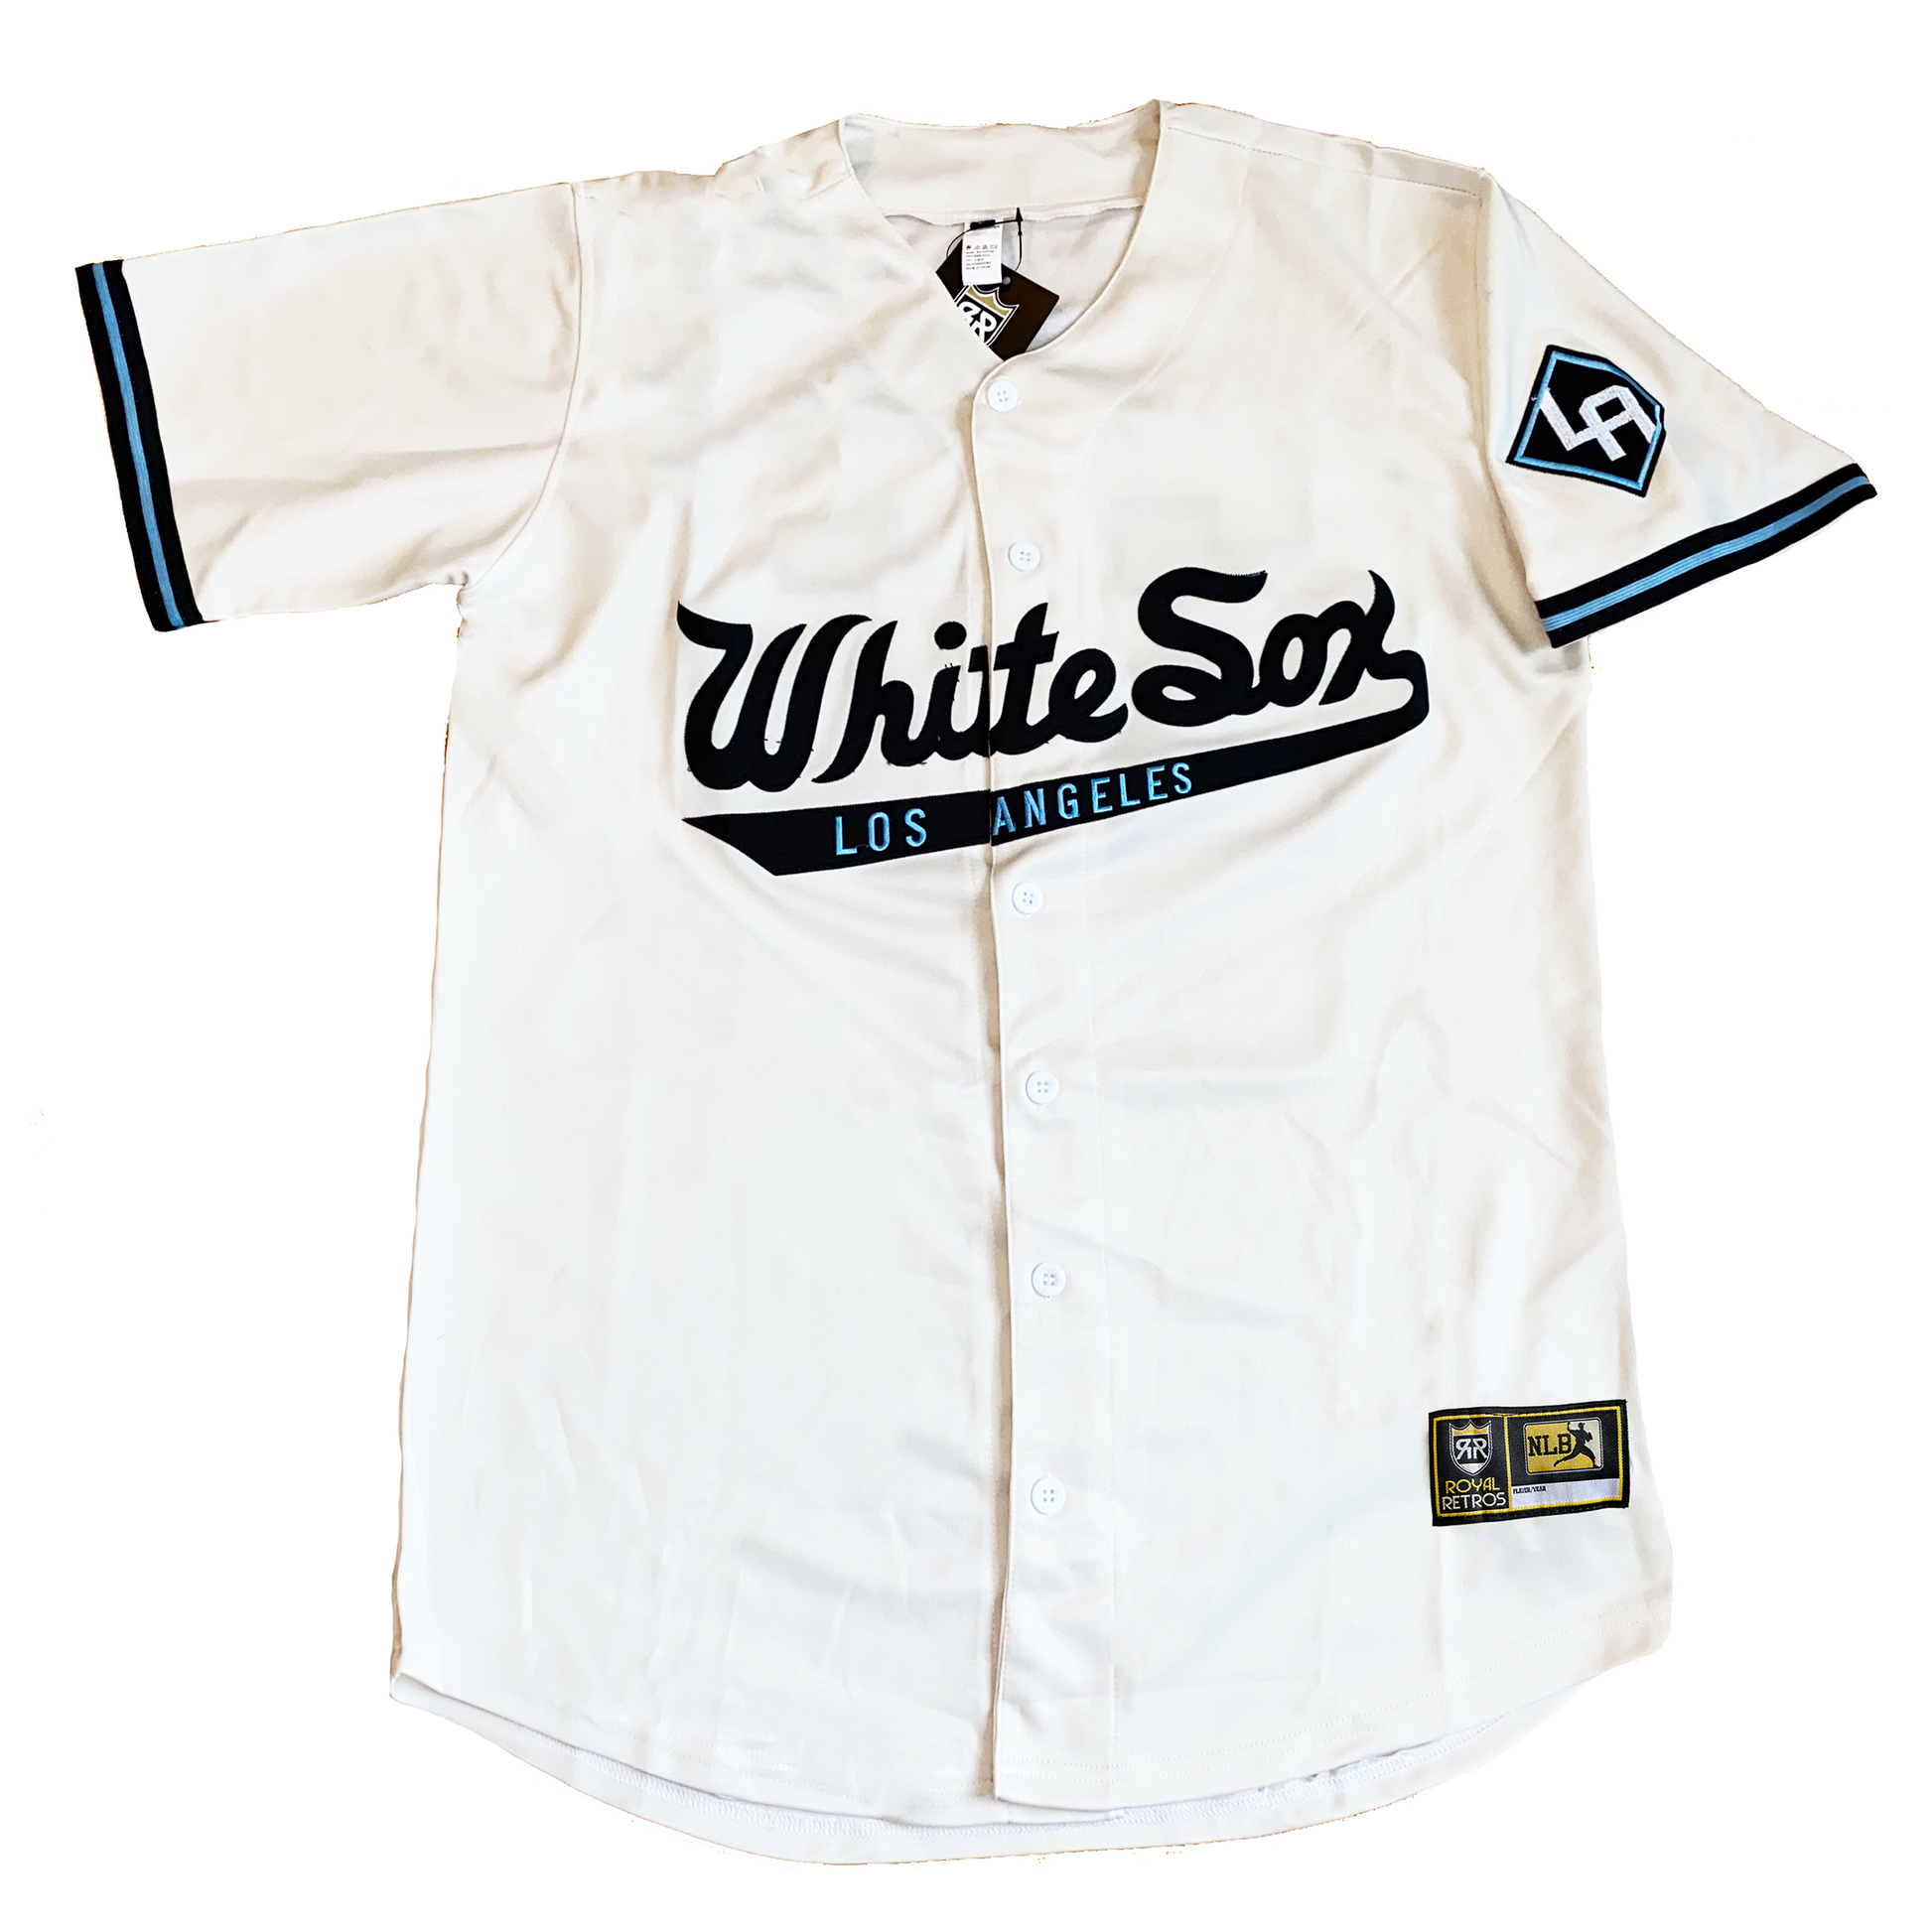 Chicago White Sox Jerseys, White Sox Baseball Jerseys, Uniforms